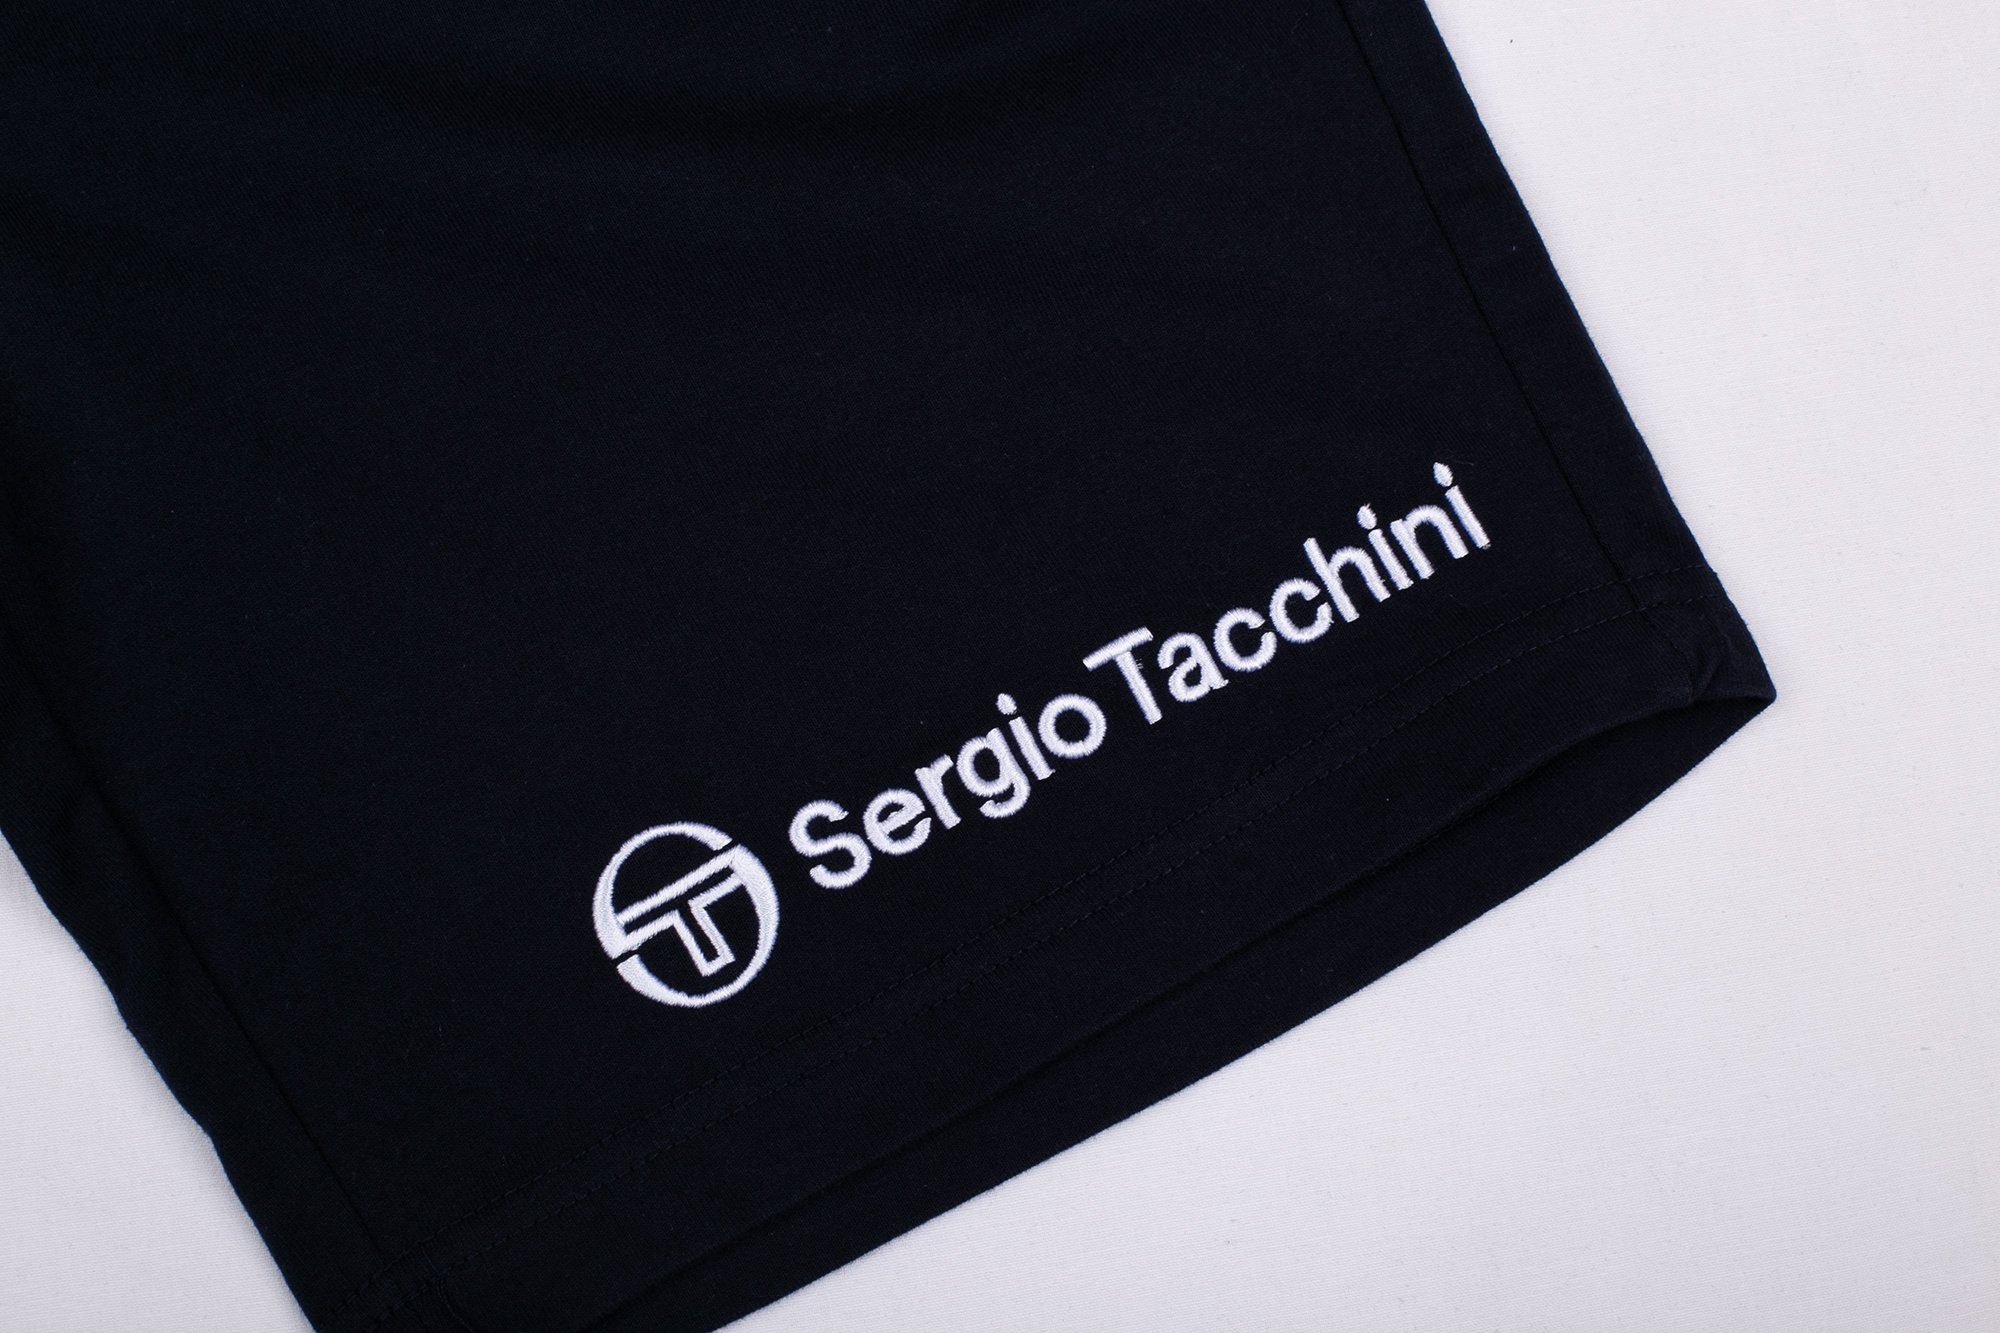 Sergio Herren Shorts Shorts navy 021 Sergio Tacchini Tacchini Asis